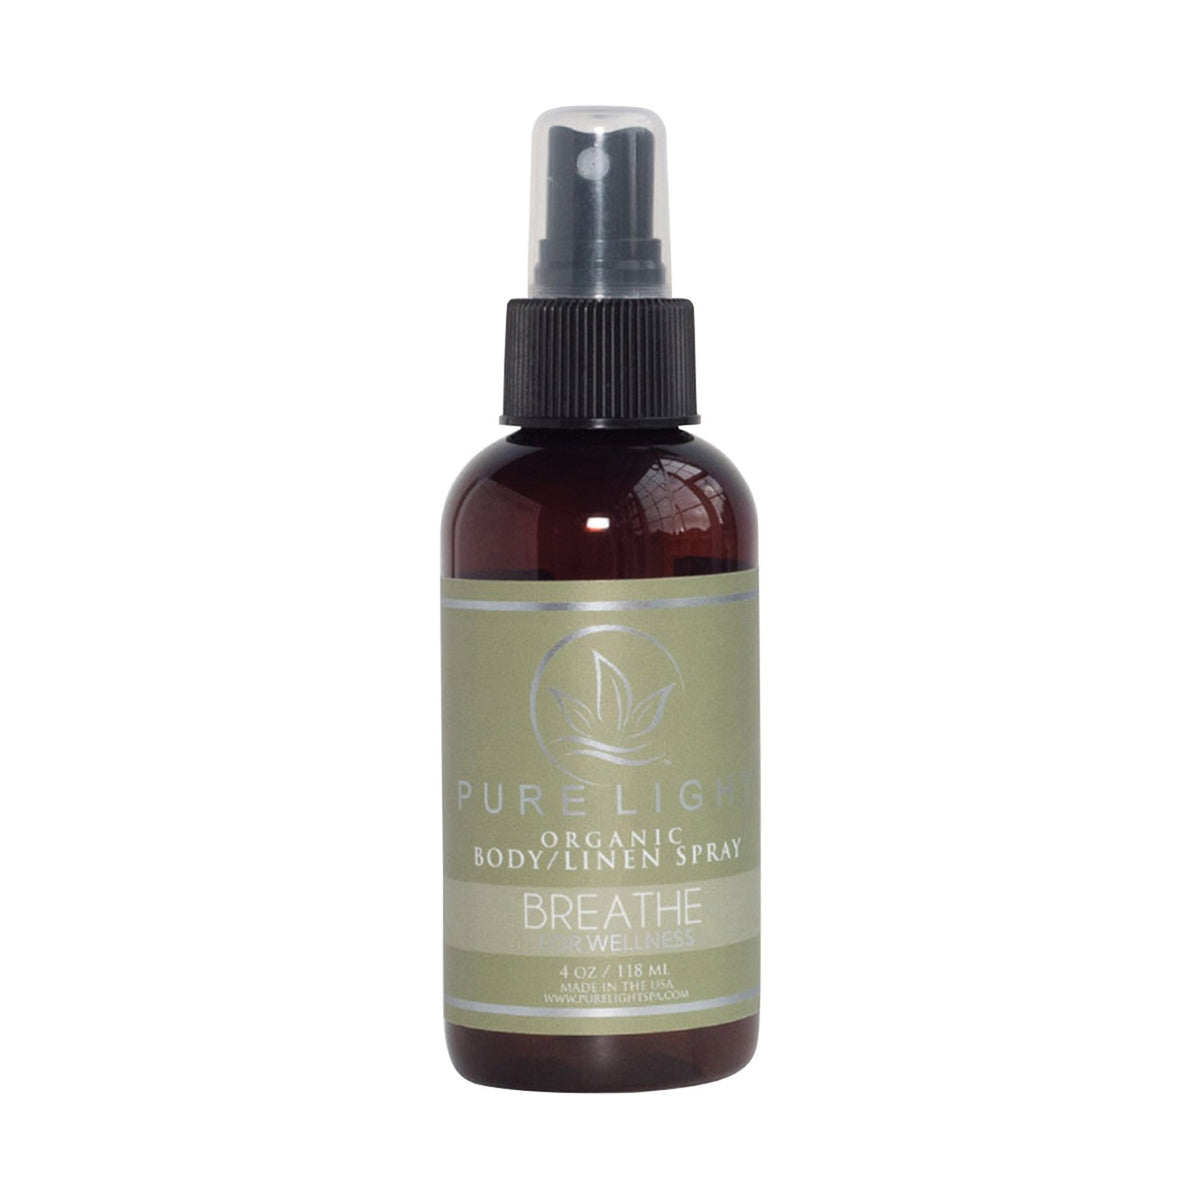 Pure Light Organic Body and Linen Spray, Breathe, 4 oz